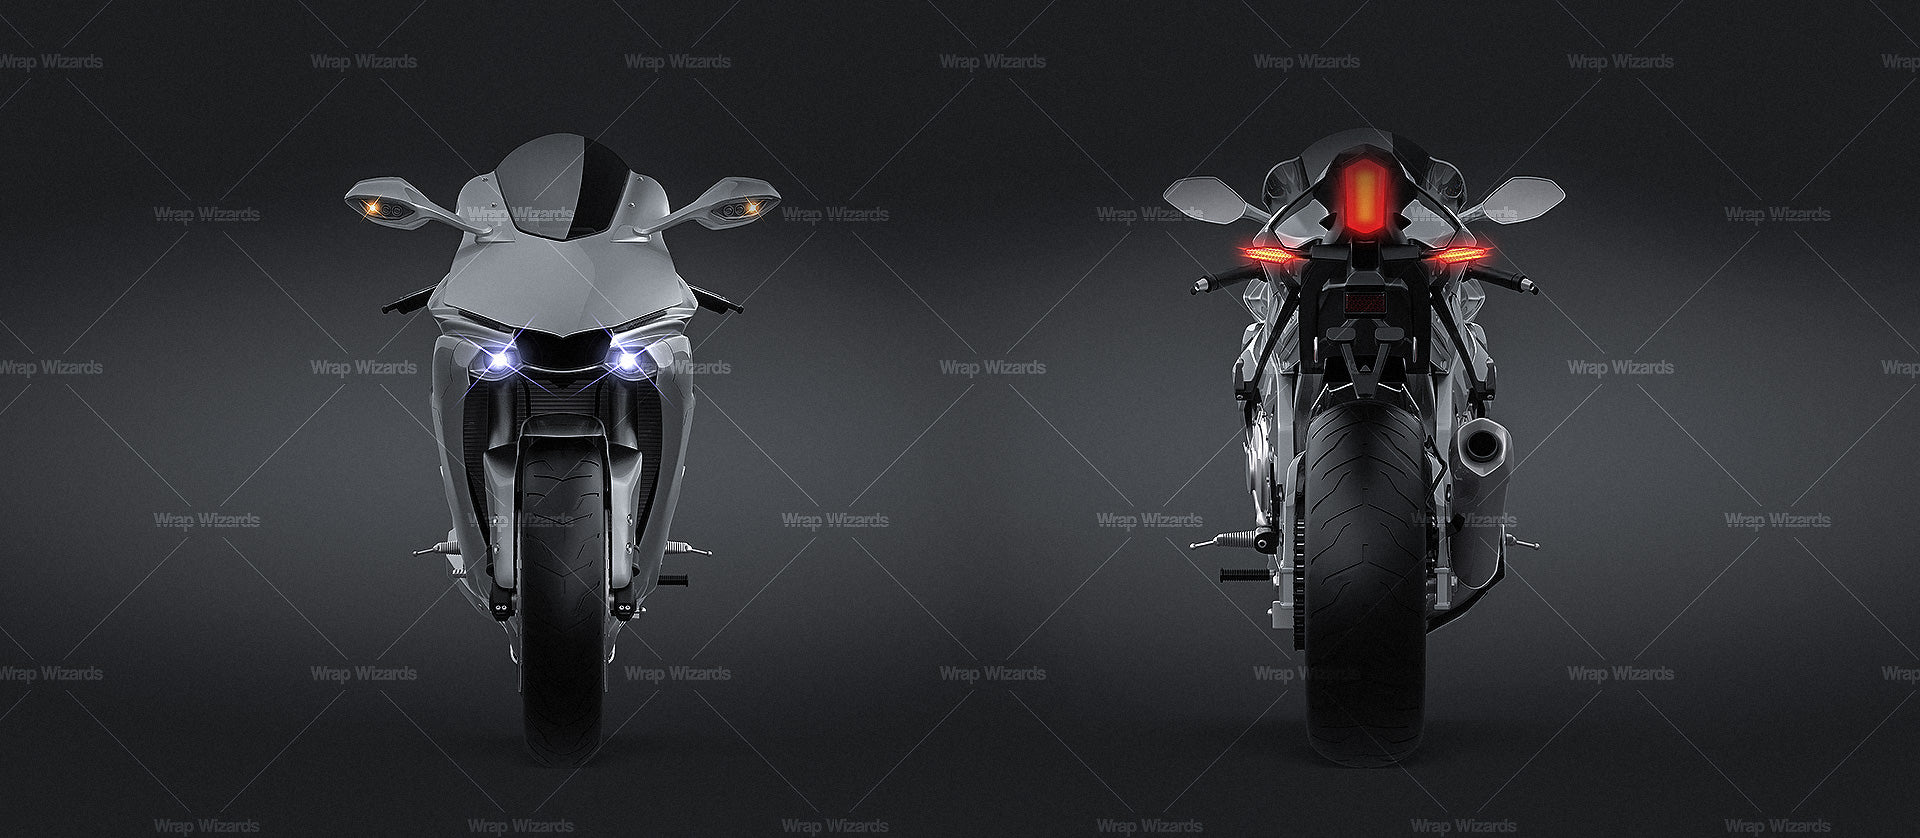 Yamaha R1 2015 glossy finish - all sides Motorcycle Mockup Template.psd